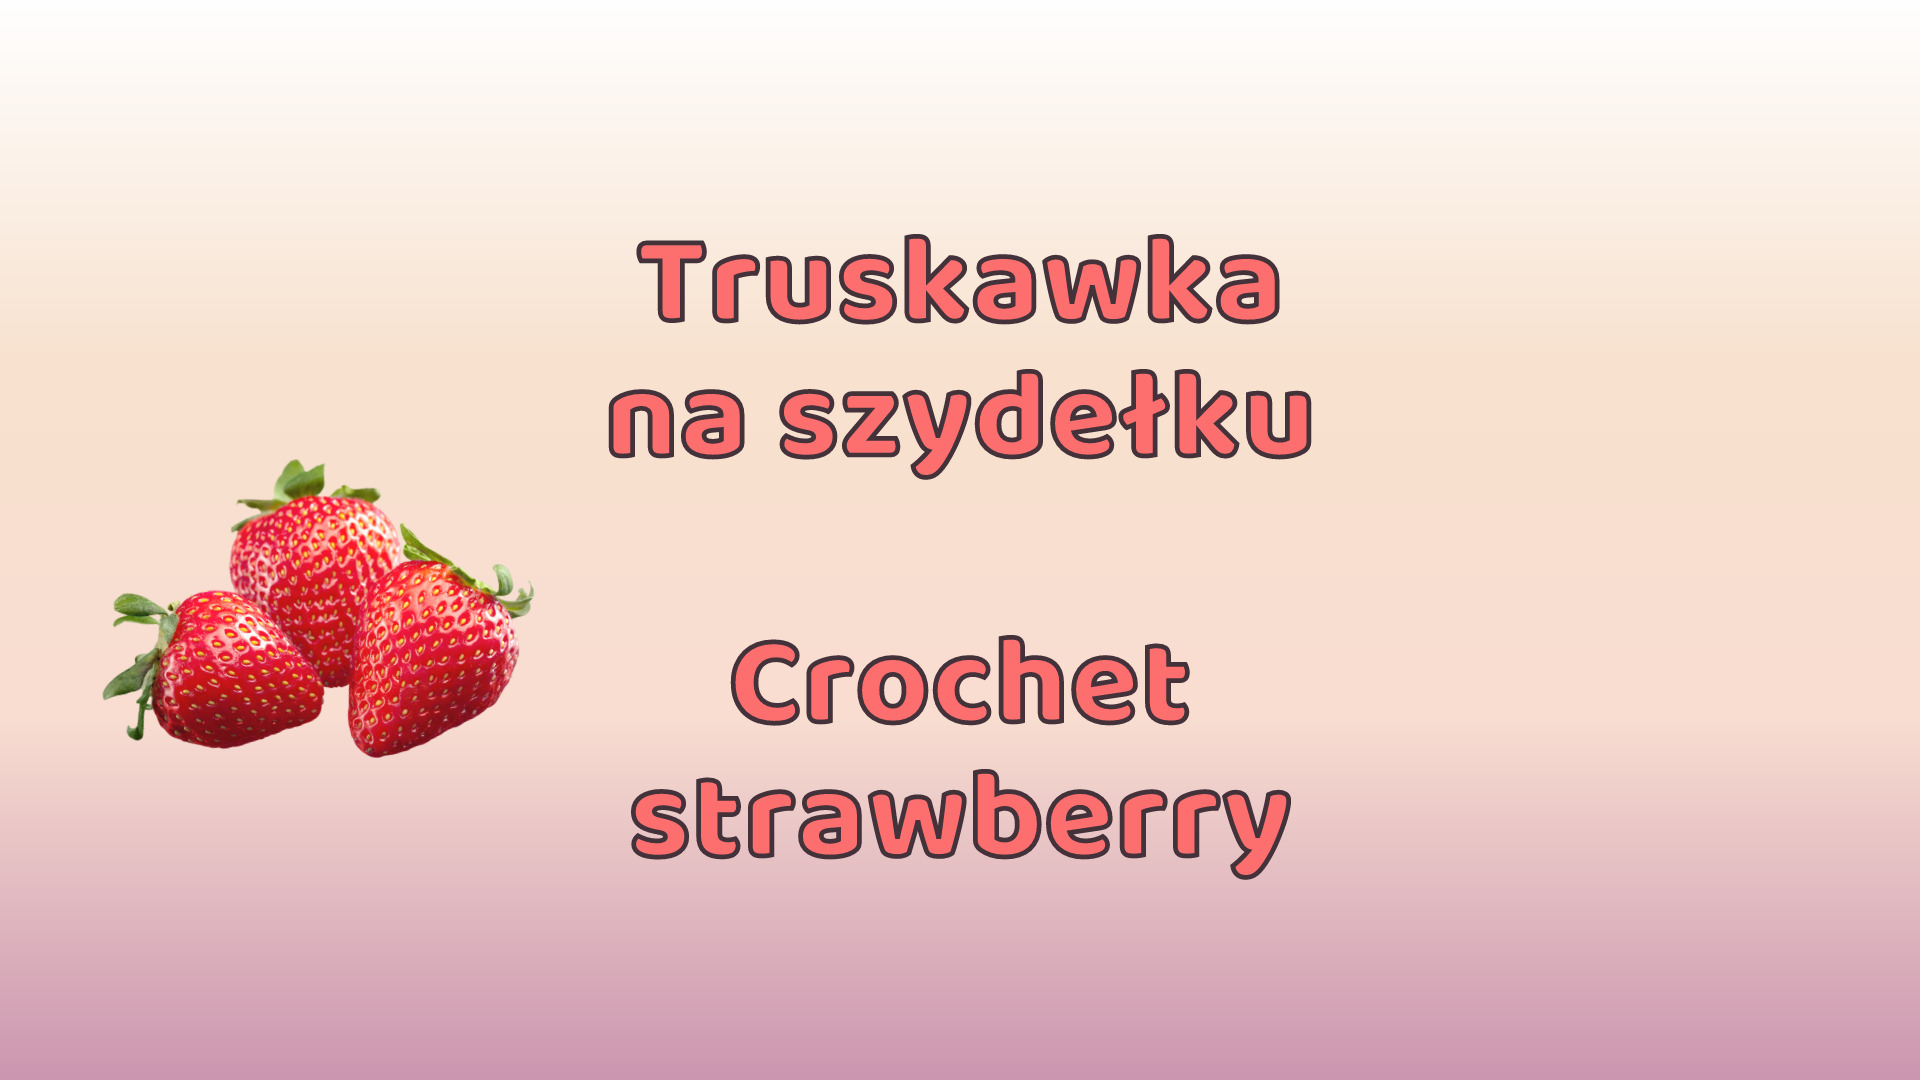 Crochet strawberry – tutorial 1 - crochet strawberry,tutorial,crochet pattern,strawberry,key chain,pendant,free pattern,free pattern